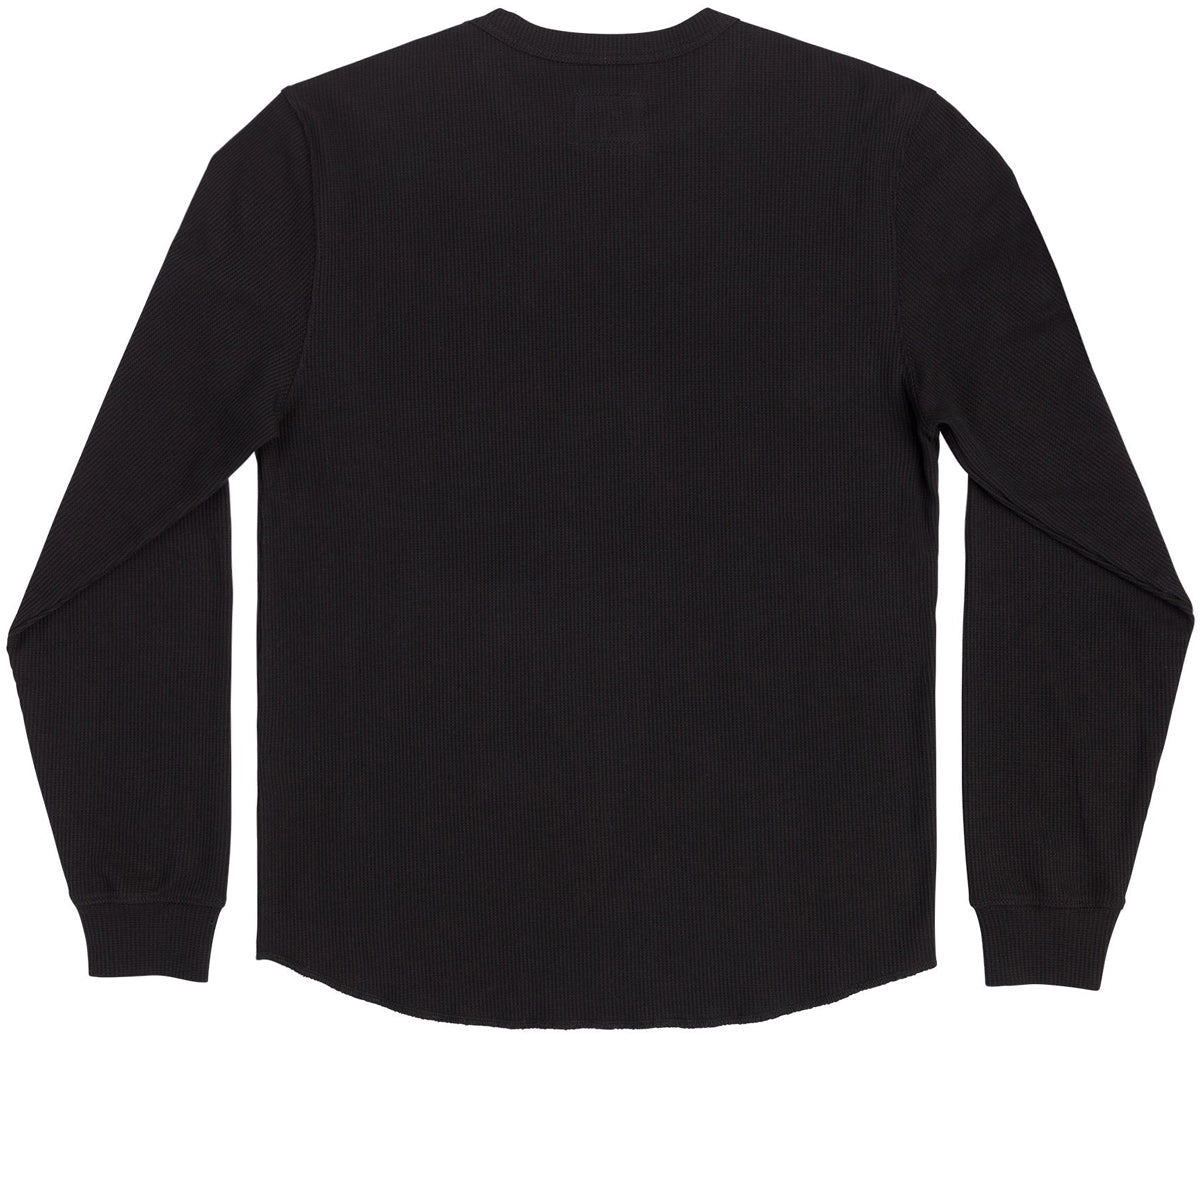 Independent Bar Logo Long Sleeve Thermal Shirt - Black image 3